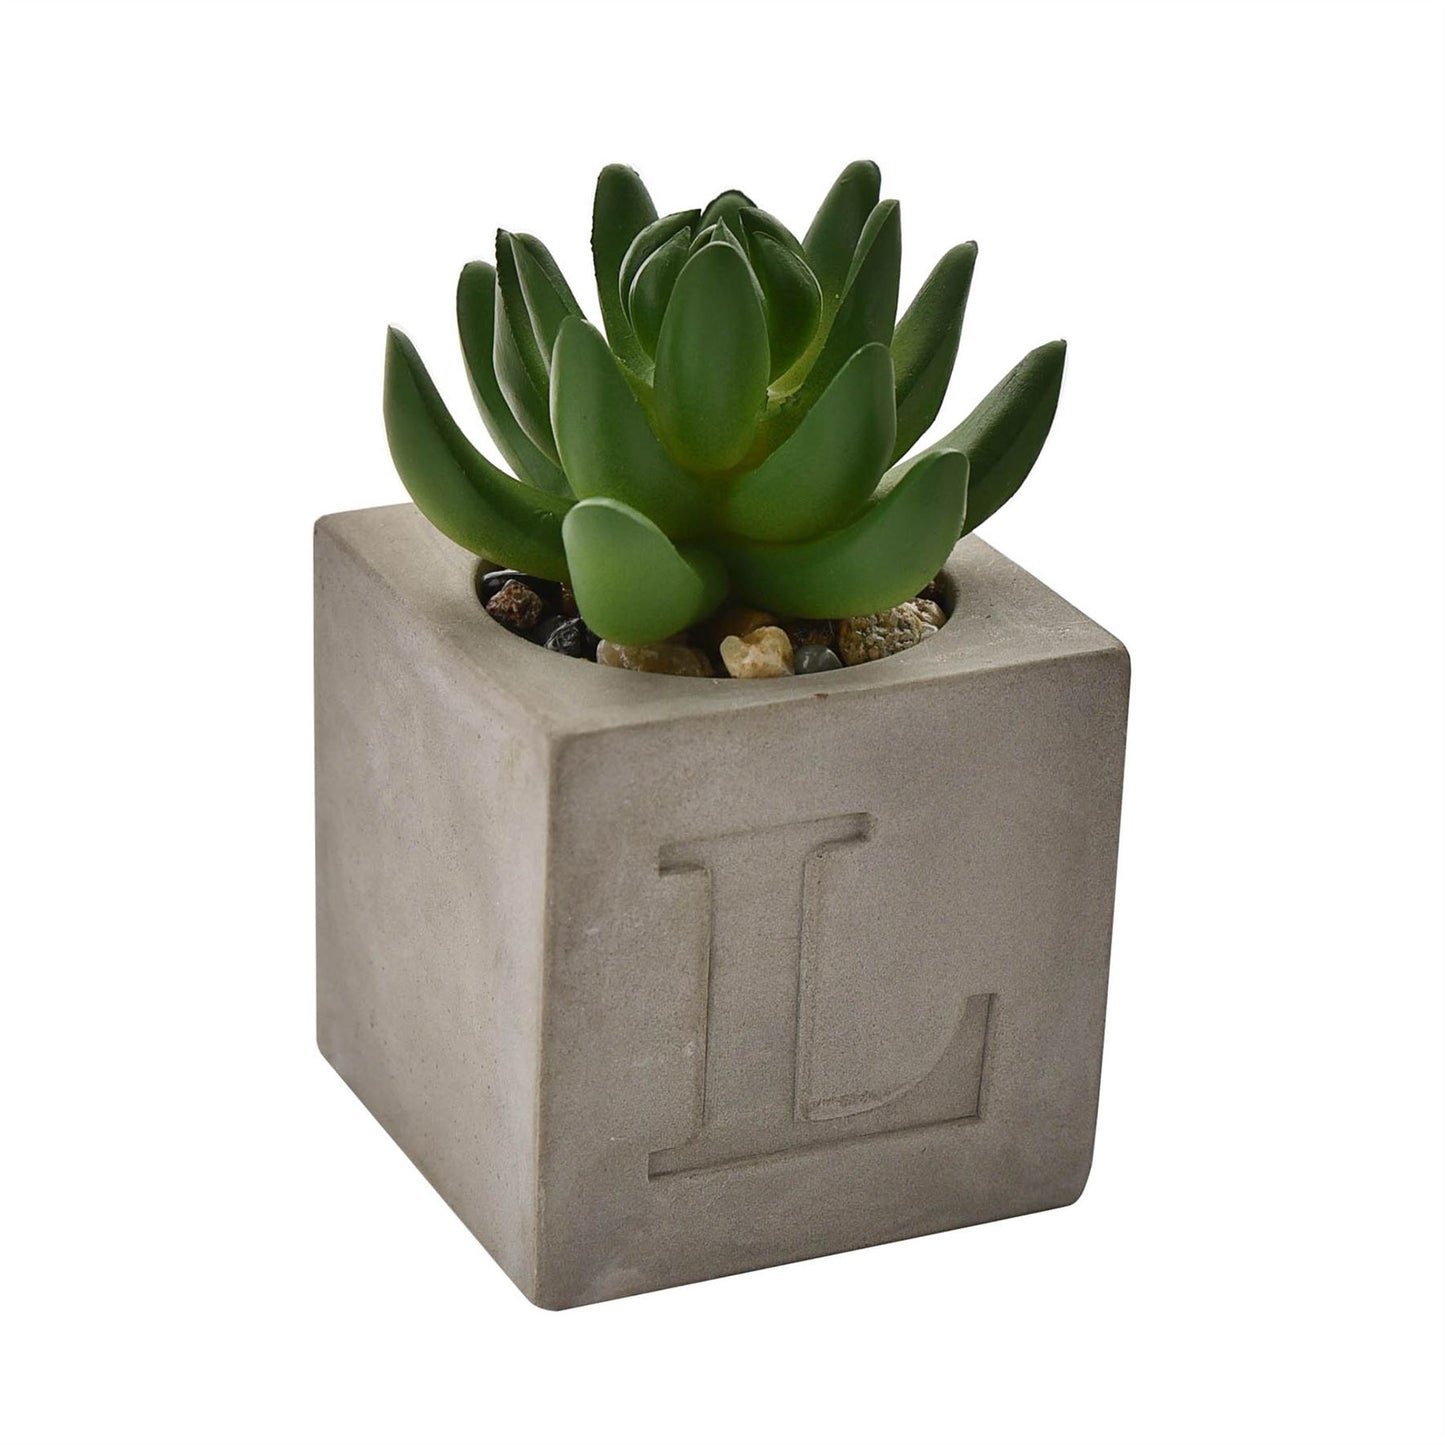 Hestia Set of 4 Faux Plants in a Cement Pot "Love" 6 x 6 cms